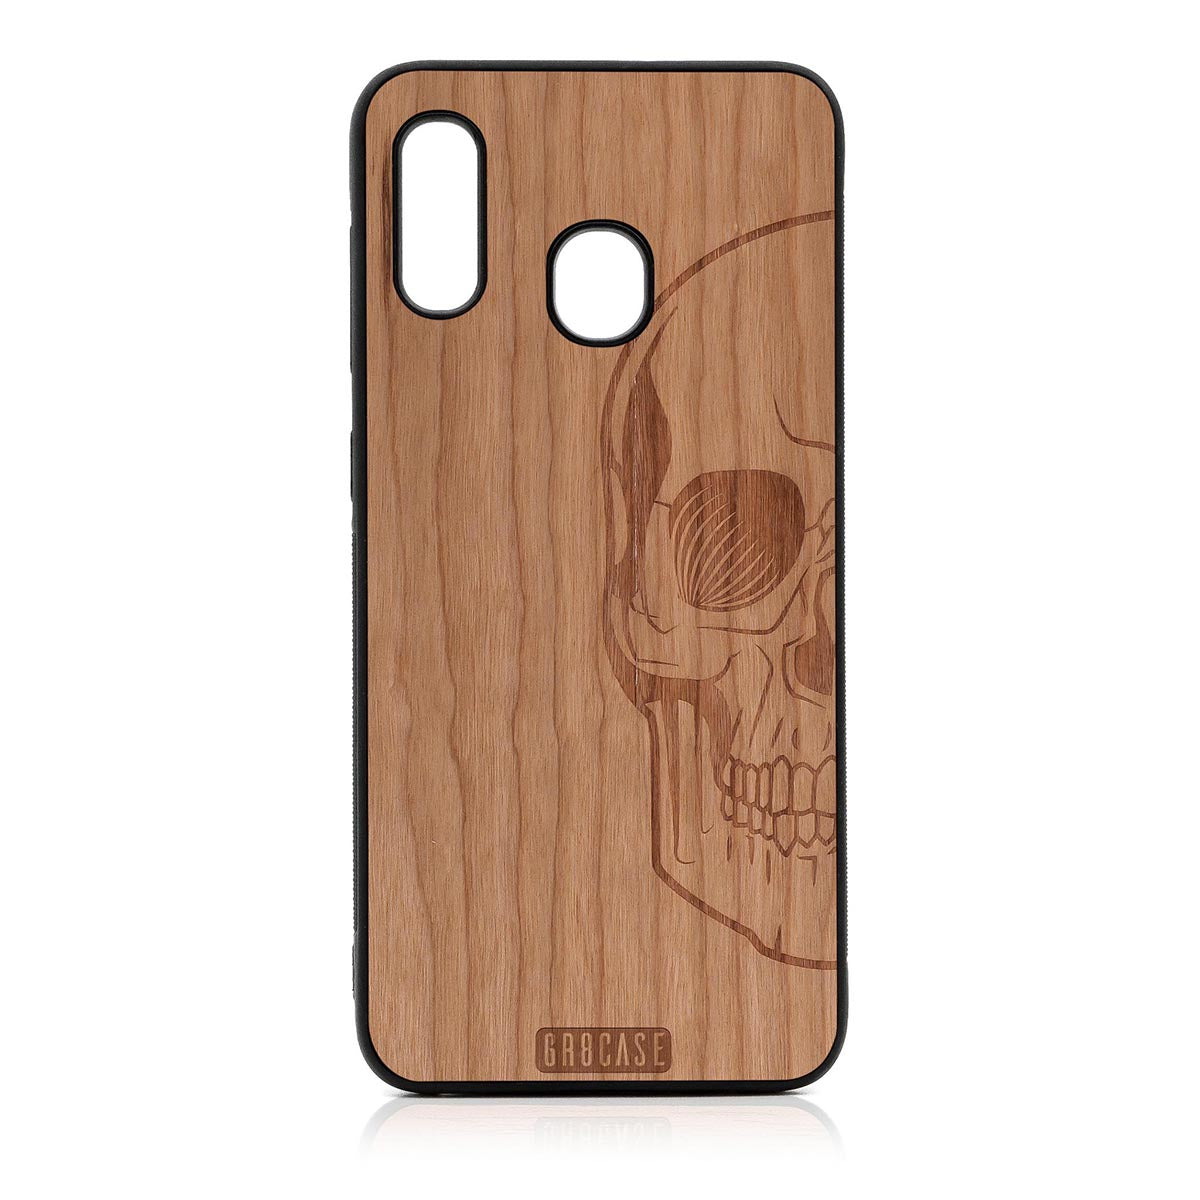 Half Skull Design Wood Case For Samsung Galaxy A20 by GR8CASE